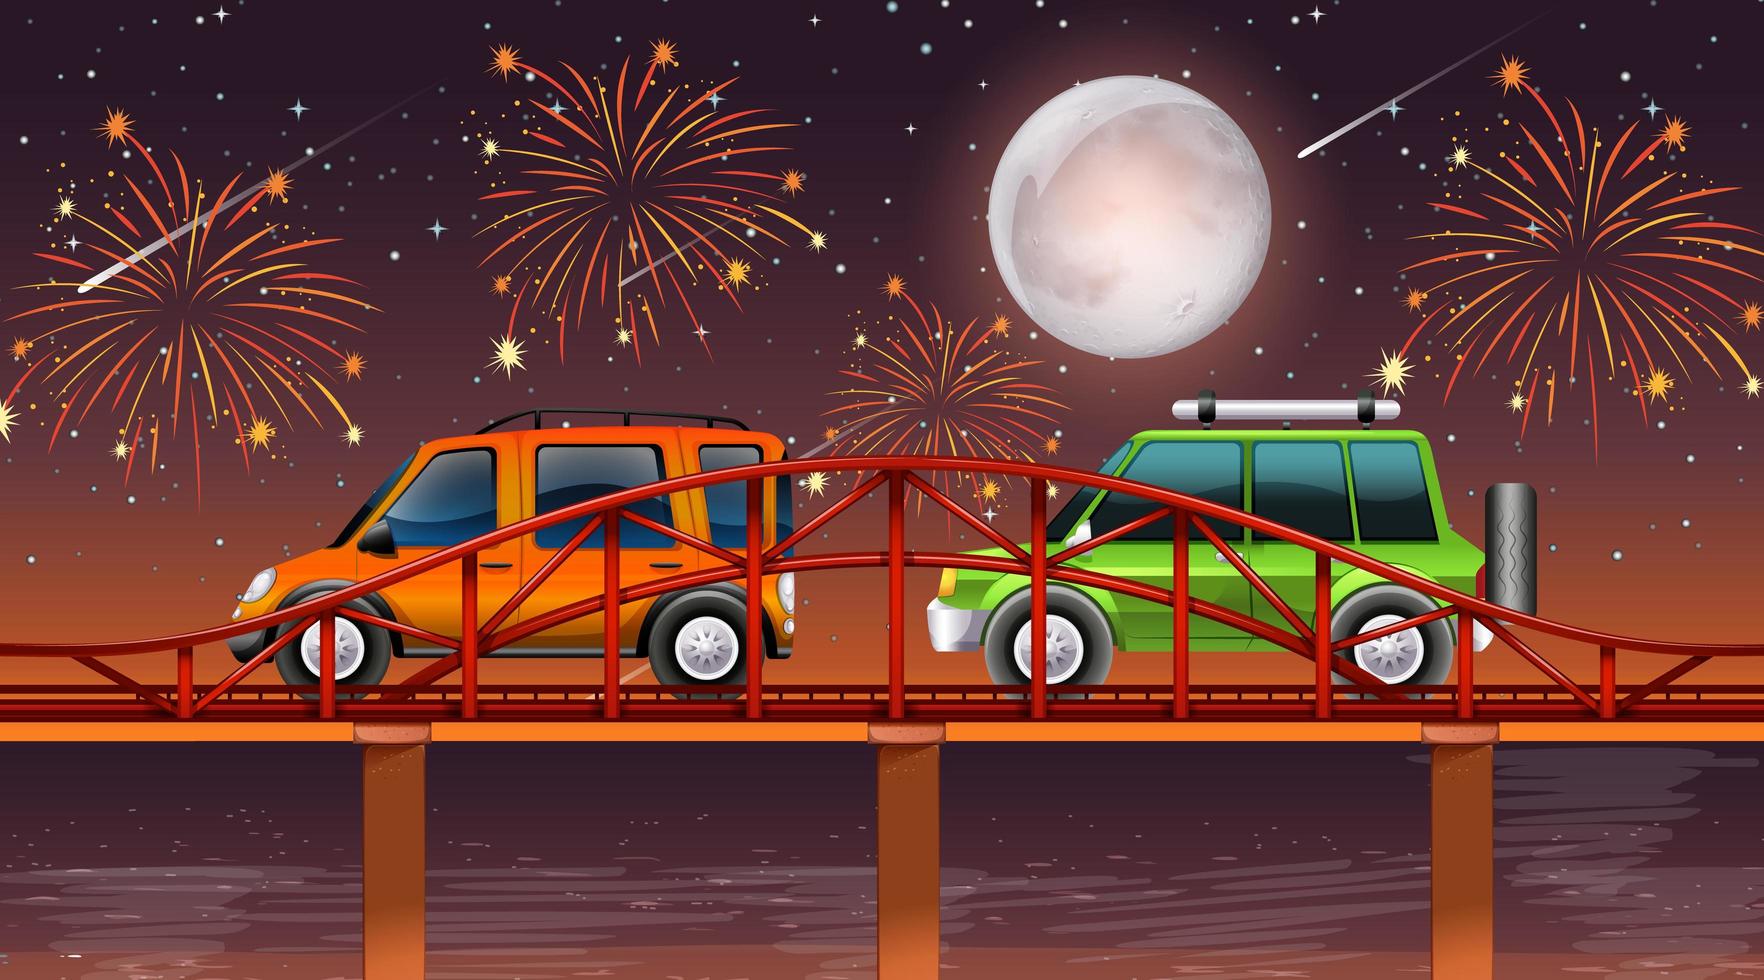 River night scene with celebration fireworks vector